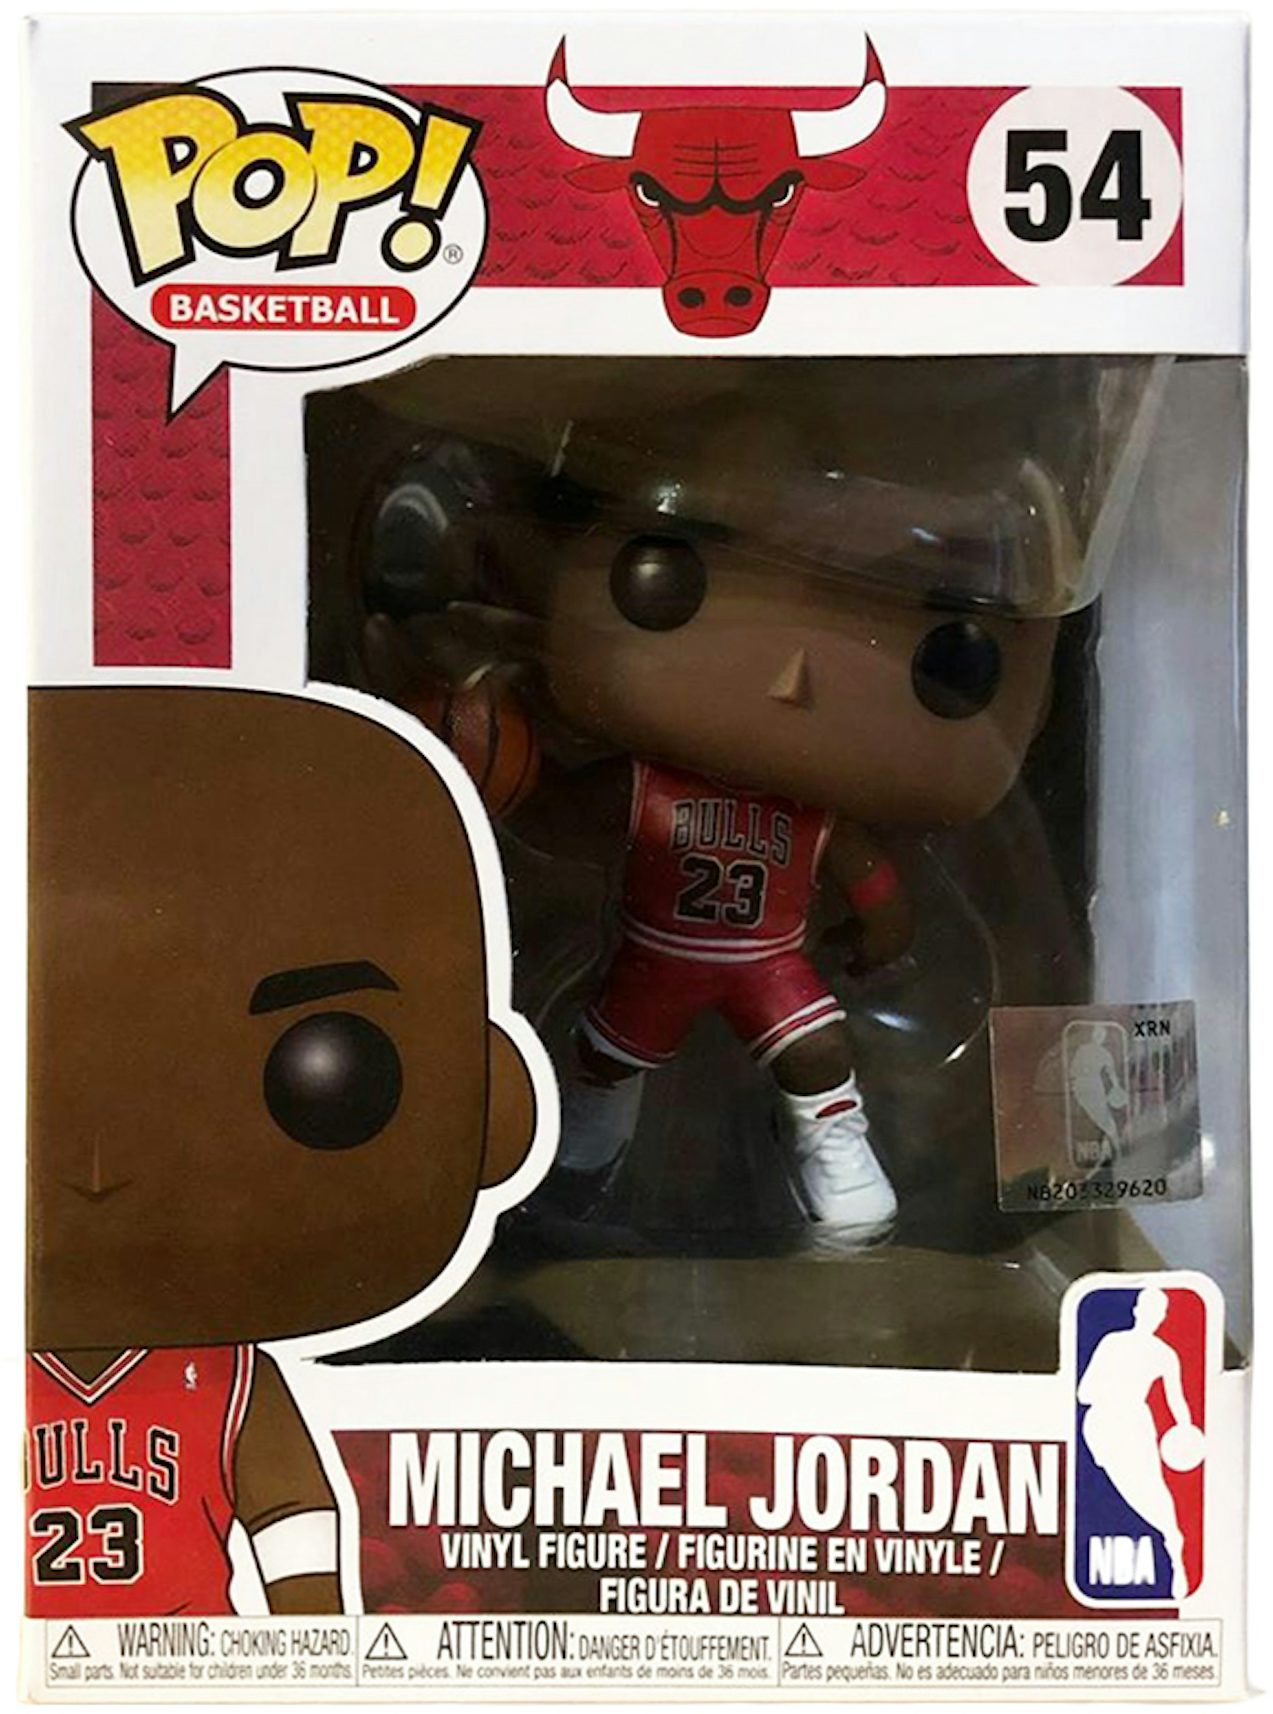 Chicago Bulls - Michael Jordan (Jumbo Pop!) vinyl figurine no. 75, NBA  Jumbo Pop!